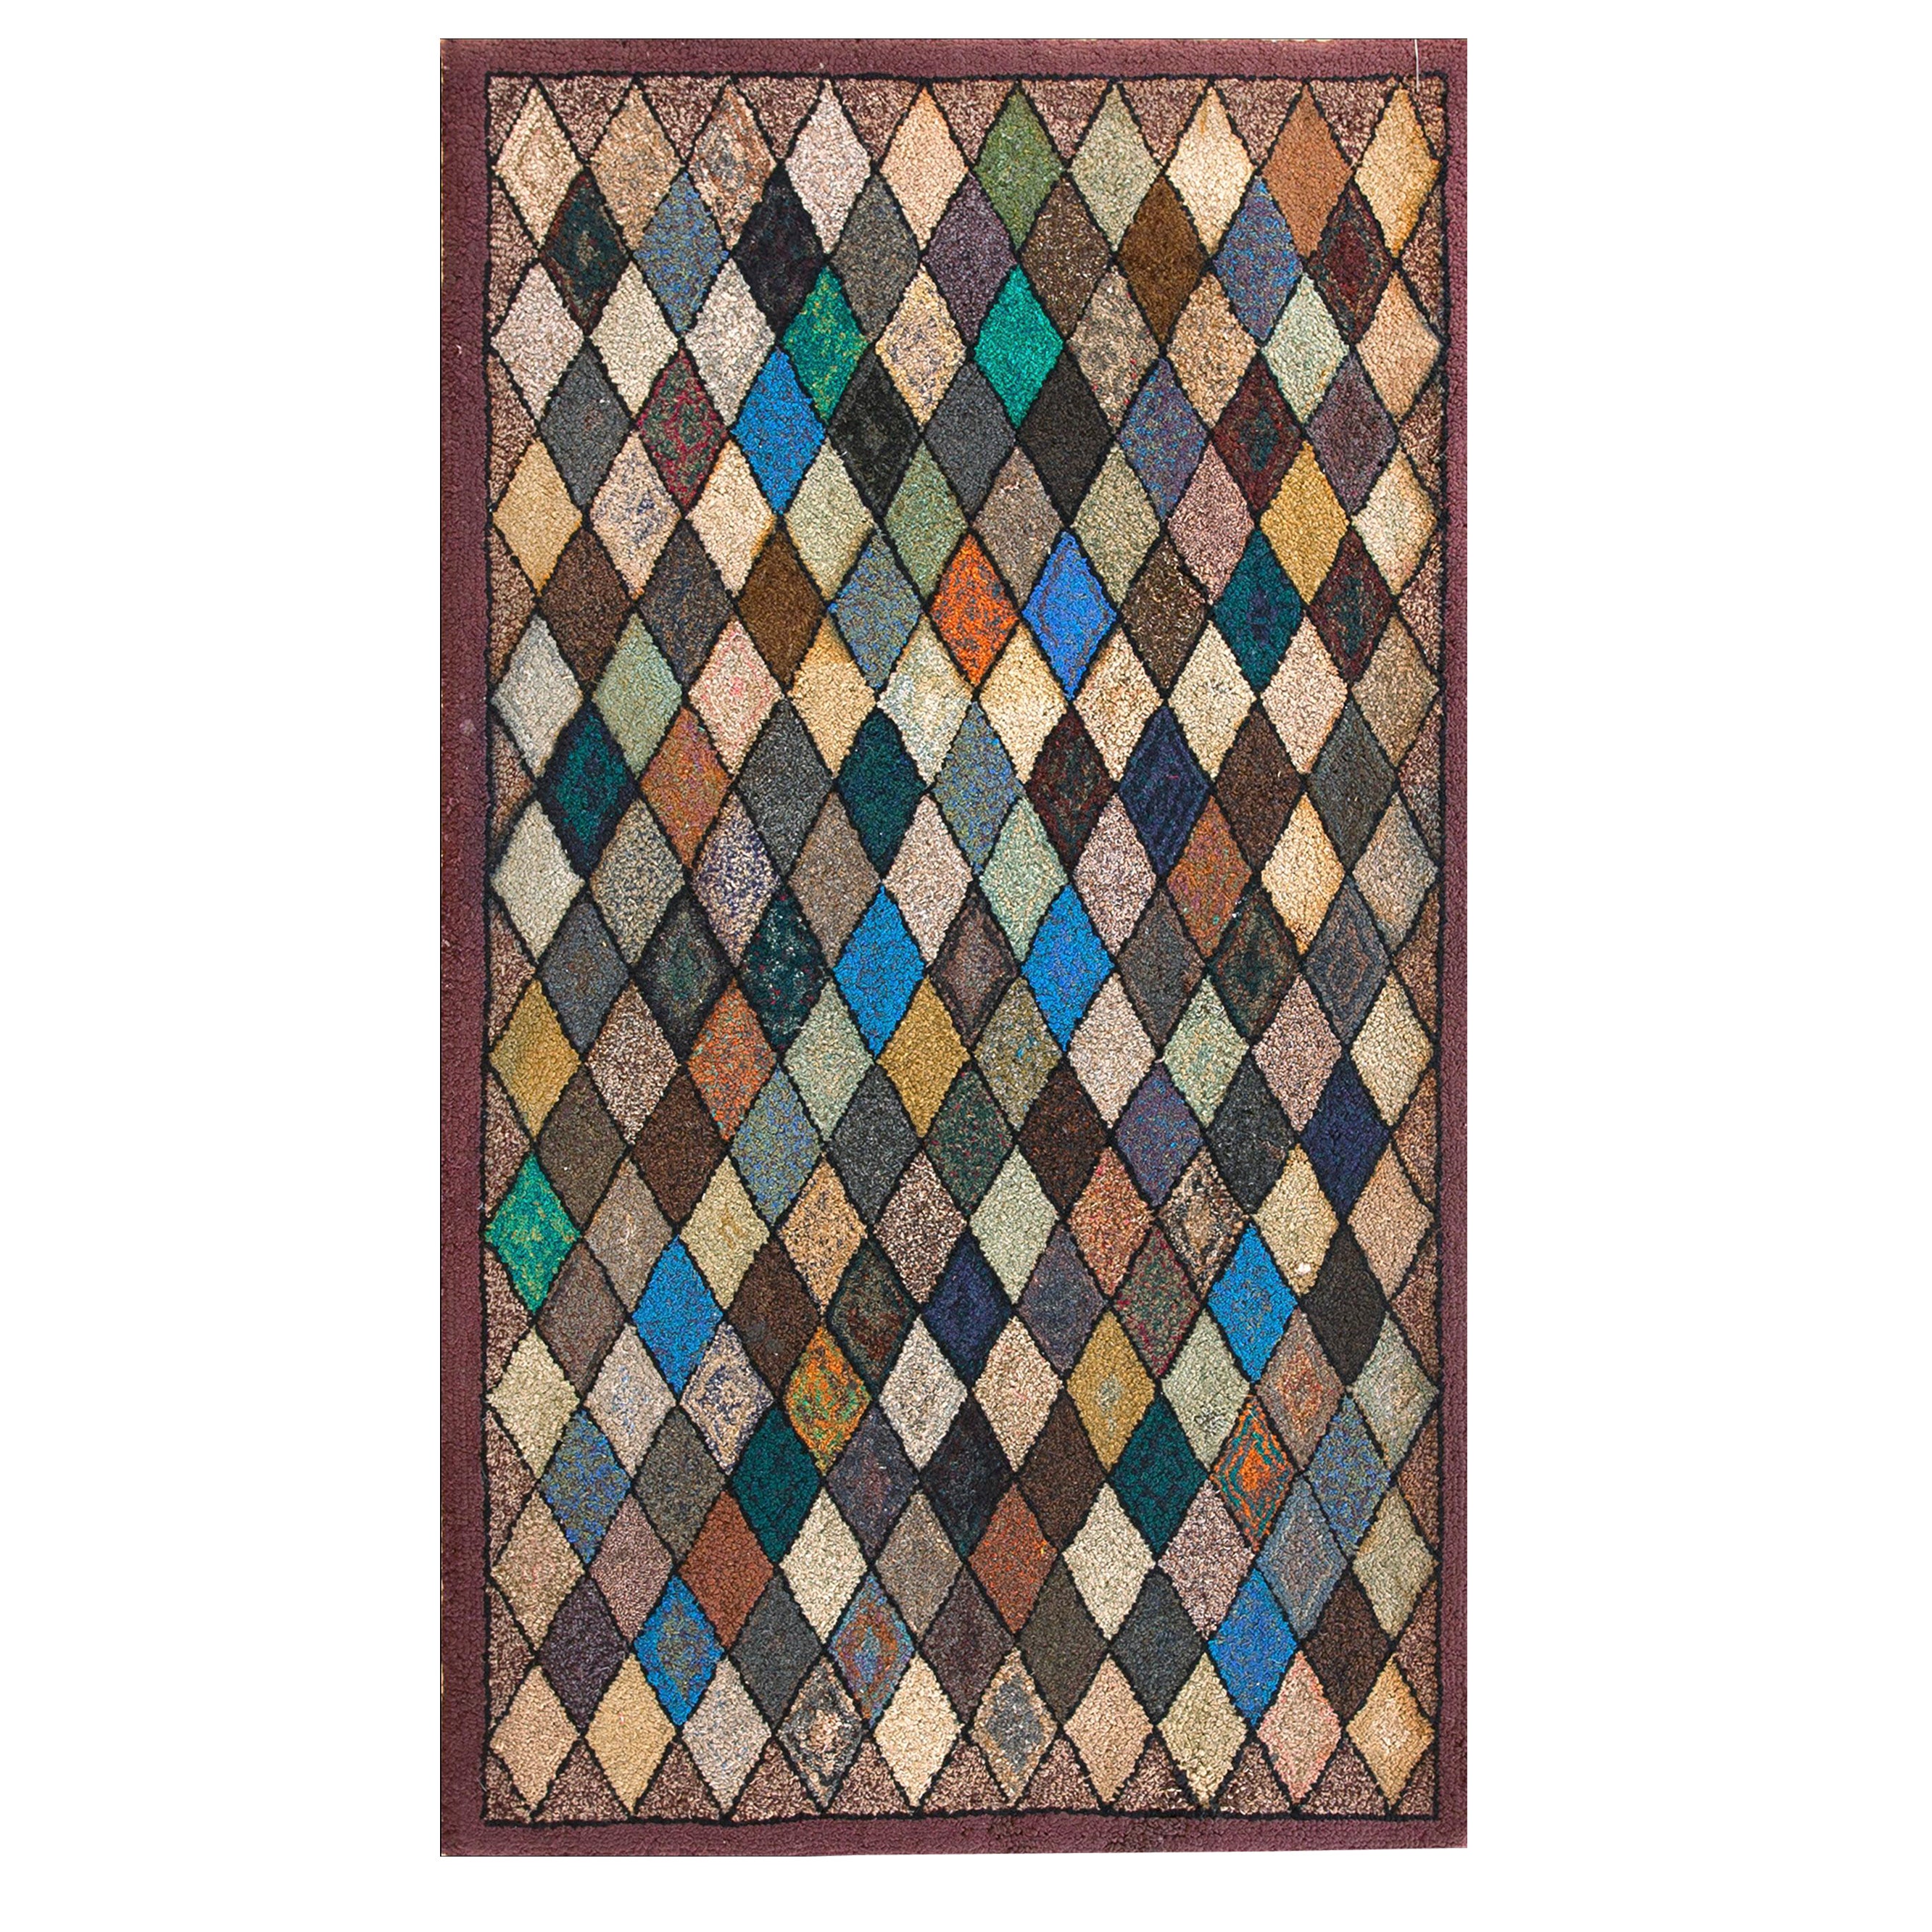 Amerikanischer Kapuzenteppich aus den 1930er Jahren ( 2'3 Zoll x 3'10 Zoll - 68 x 116 cm)